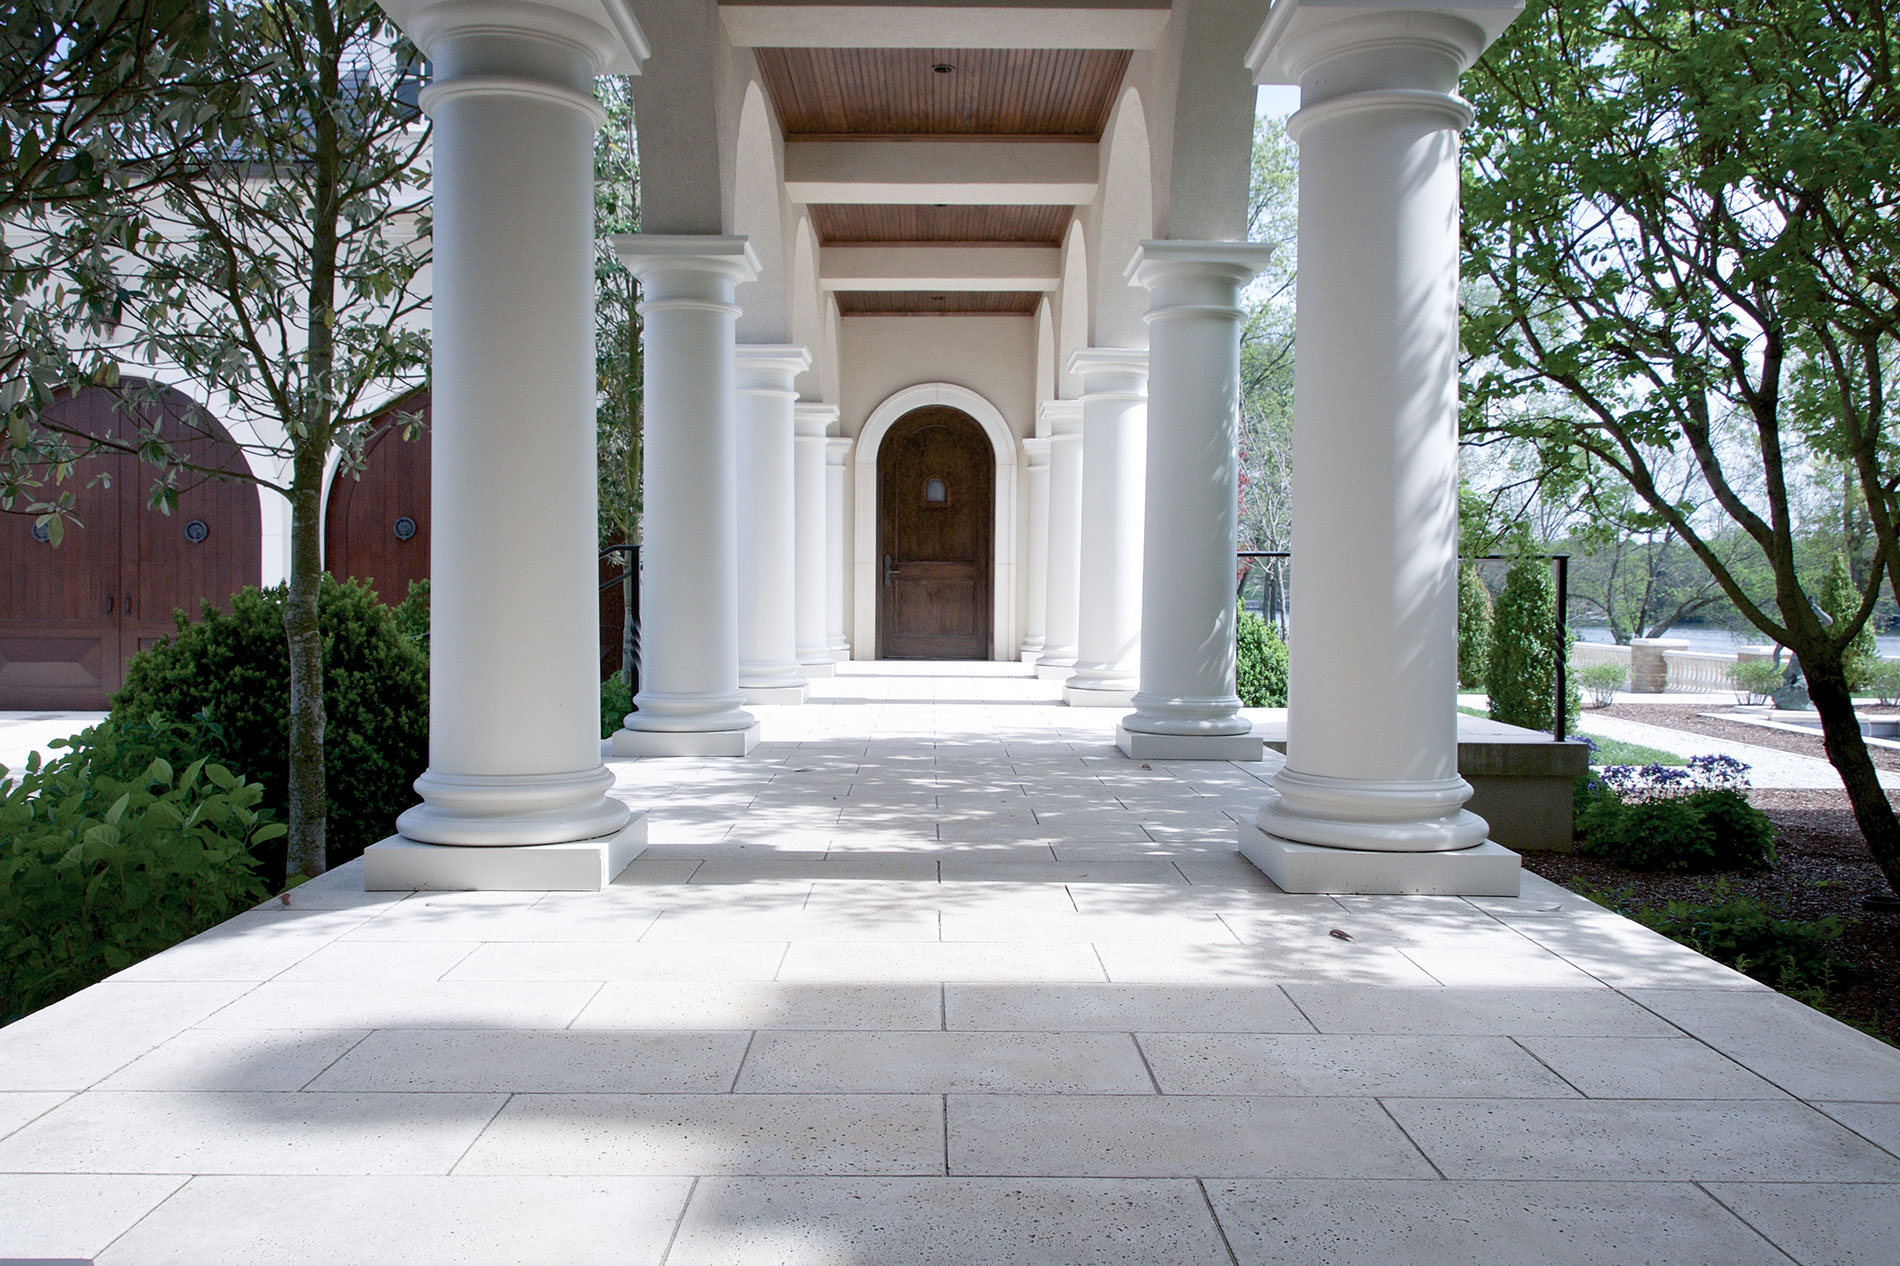 This covered walkway has custom door surrounds, deck columns, and slab steps that raise the walkway floor level